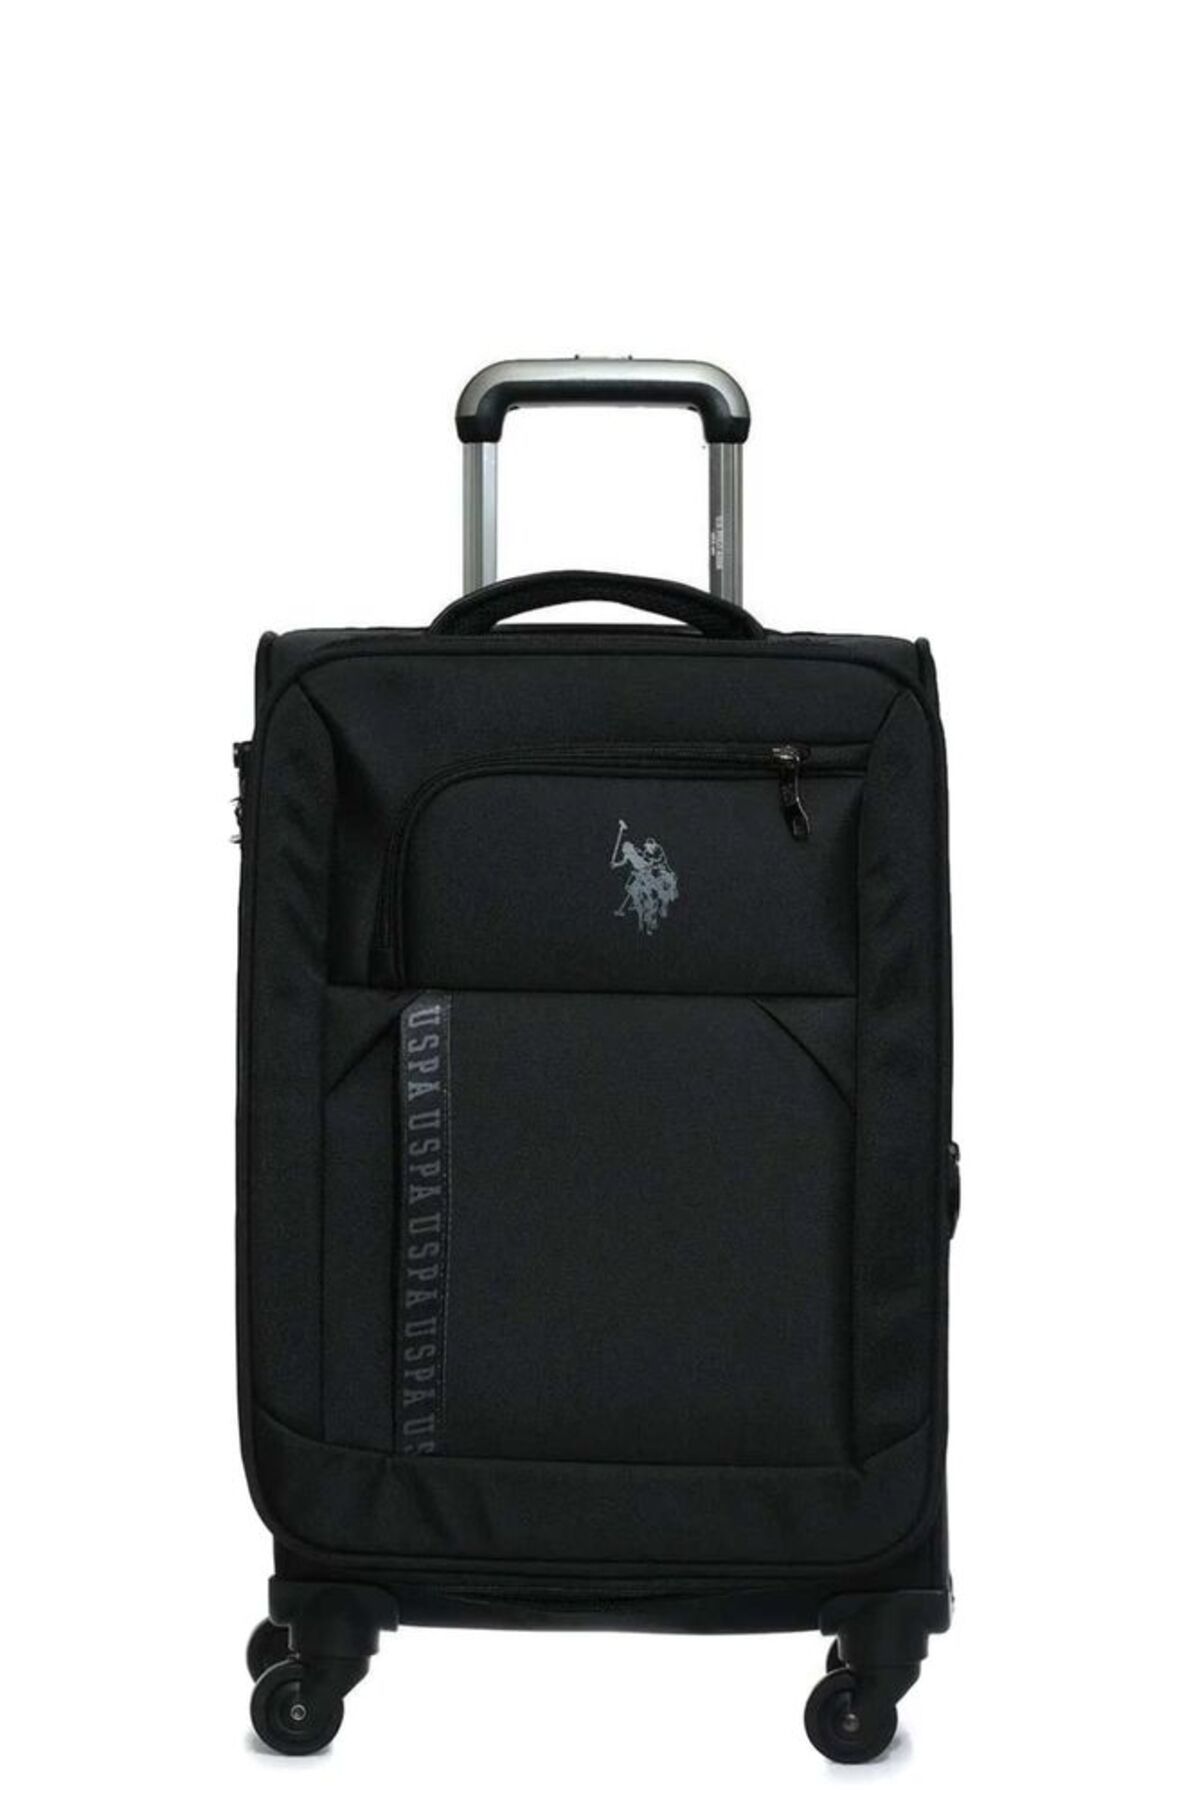 U.S. Polo Assn. پارچه مشکی چمدان یونیککس اندازه کابین یونیسکس plvlz22804c-k